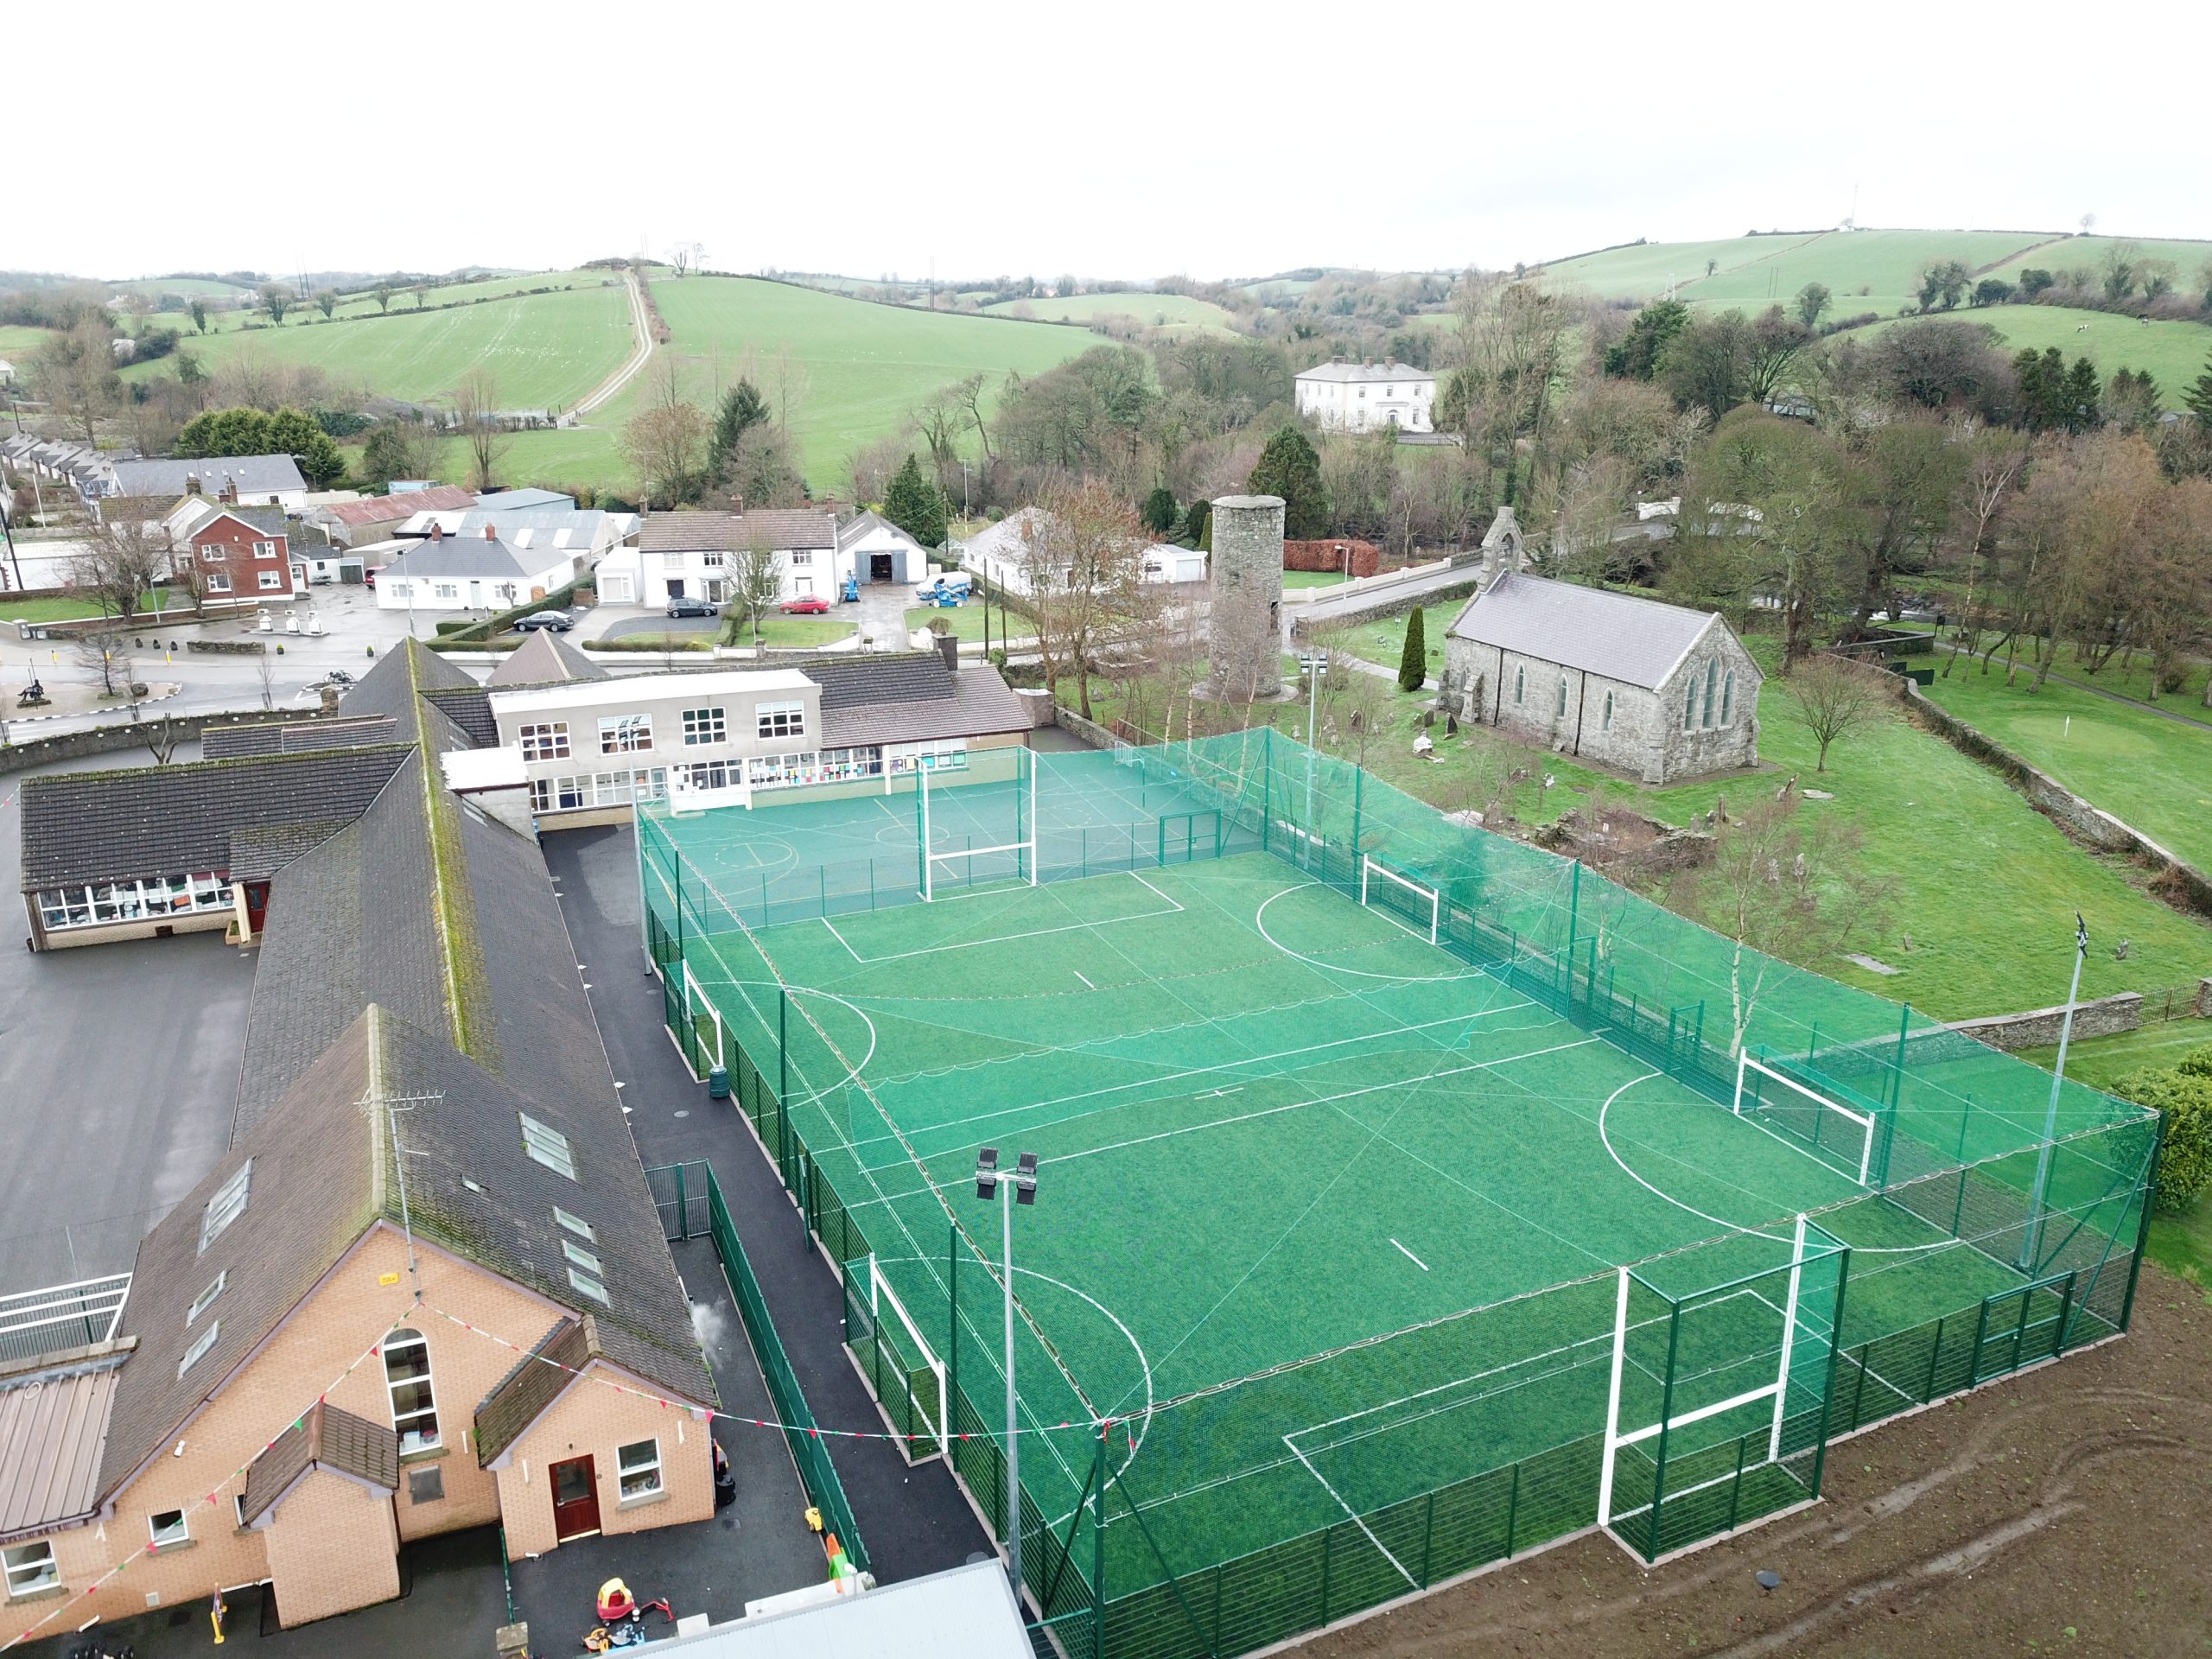 St Daigh’s National School, Inniskeen artificial turf sports field, Ireland